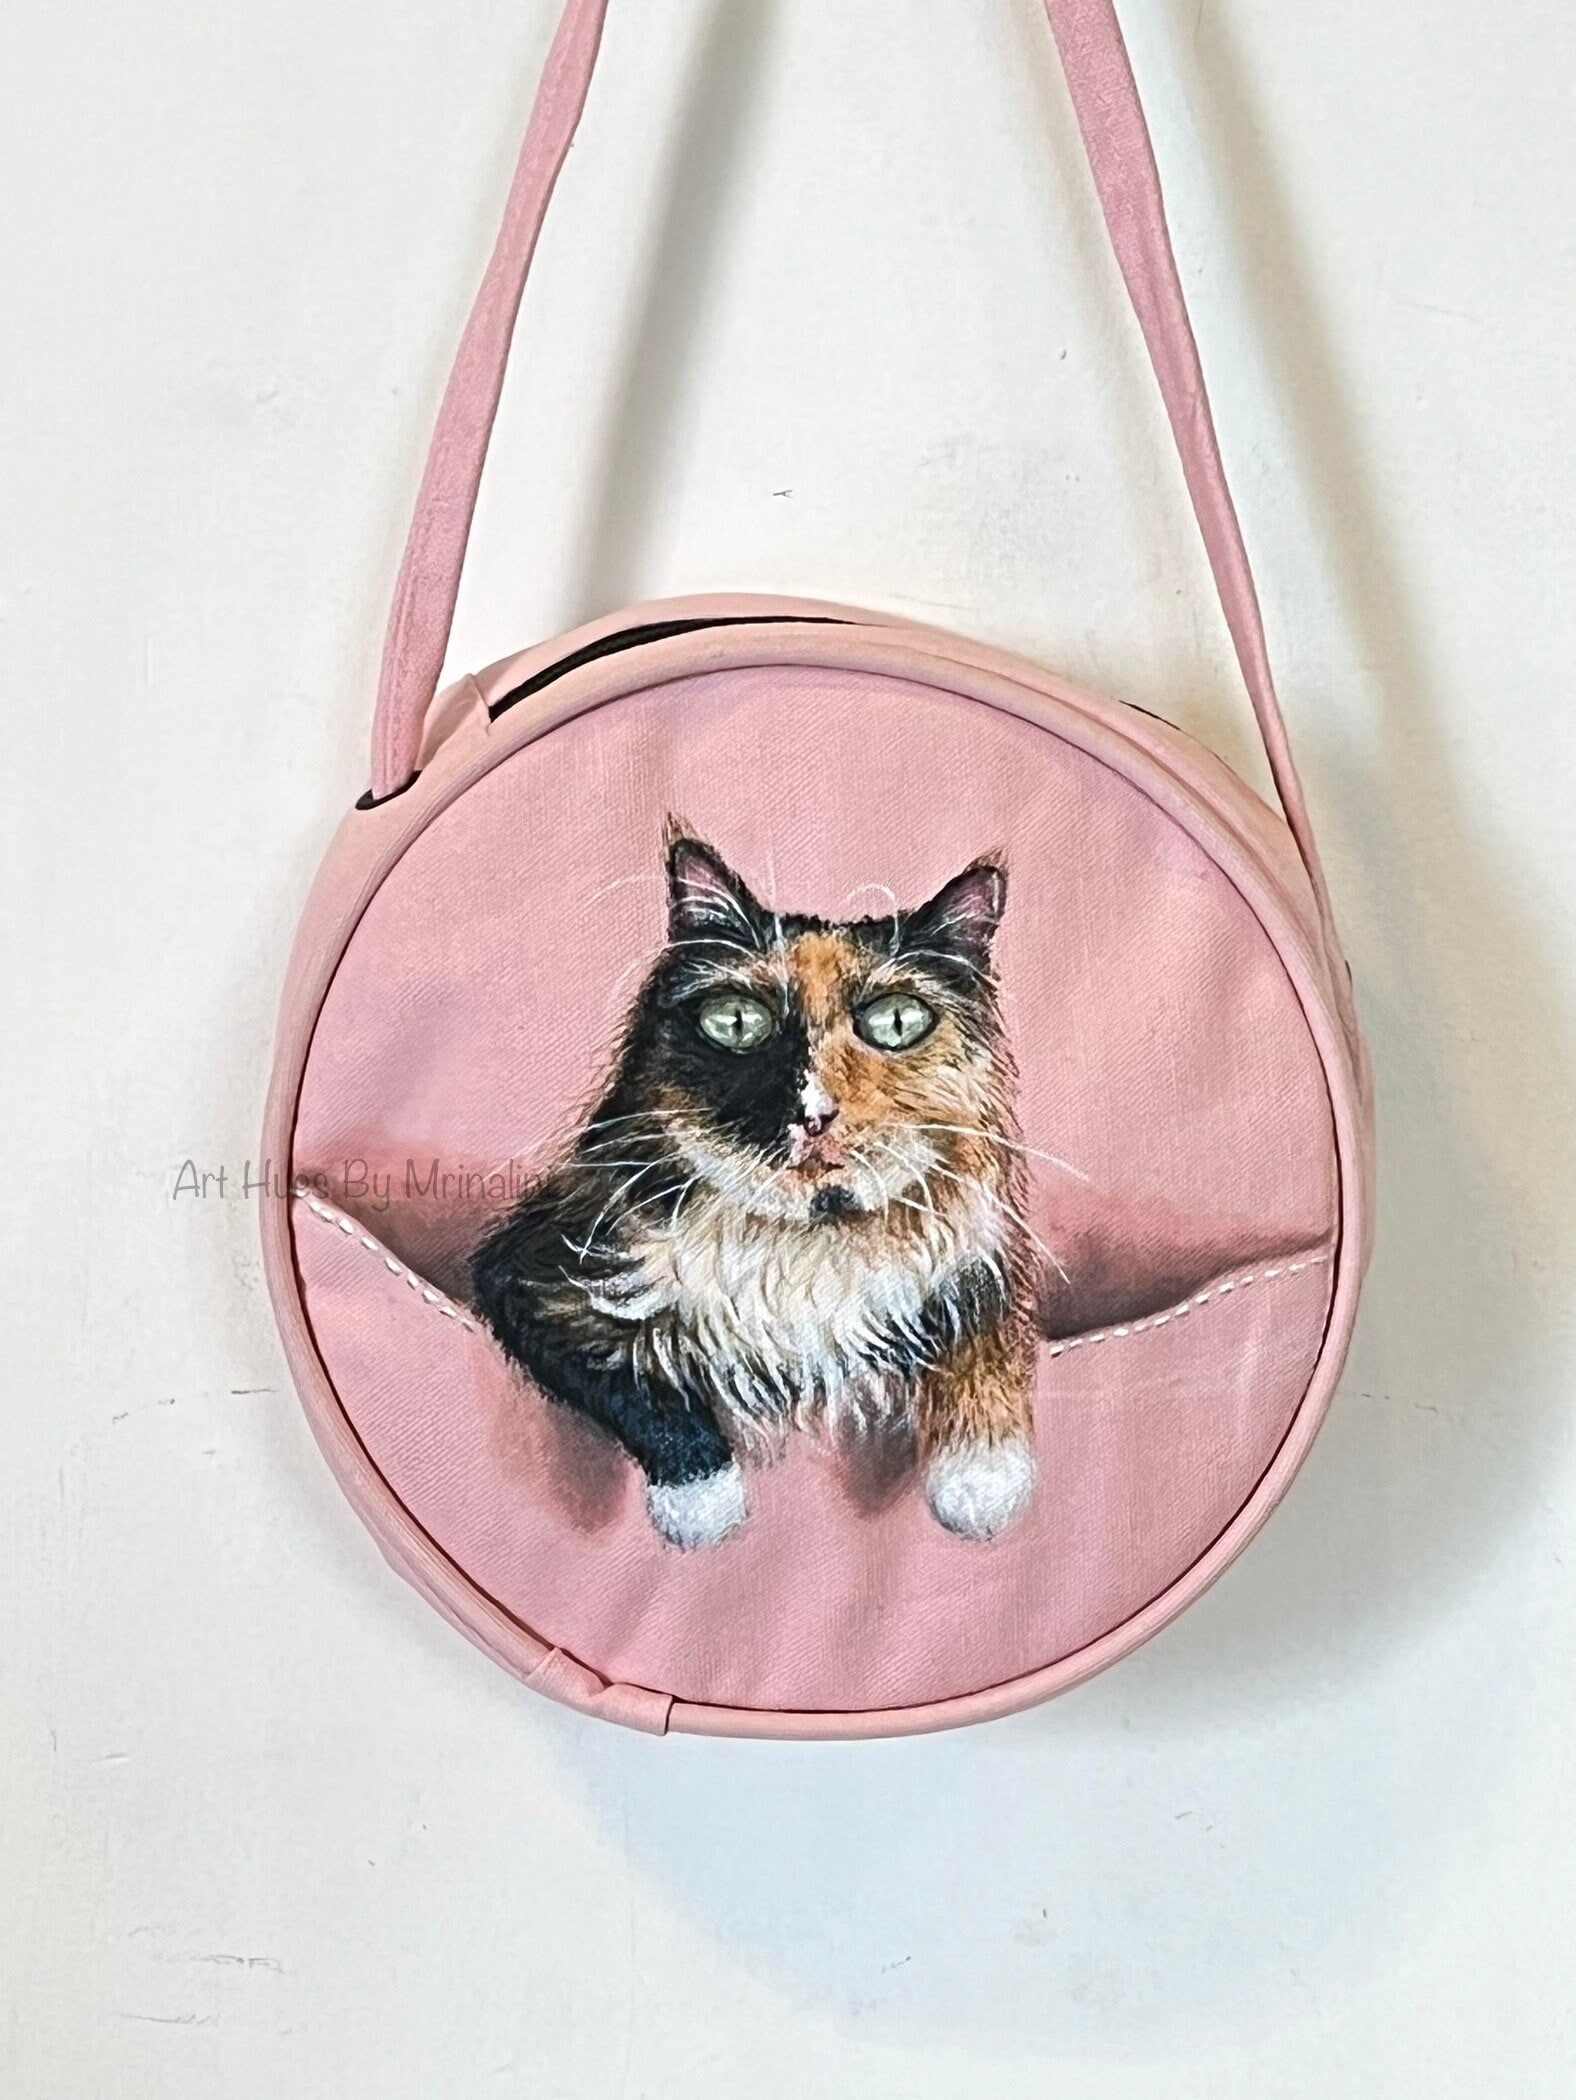 Gatito, bolsa de tela, hecha a mano, para guardar bolsas de